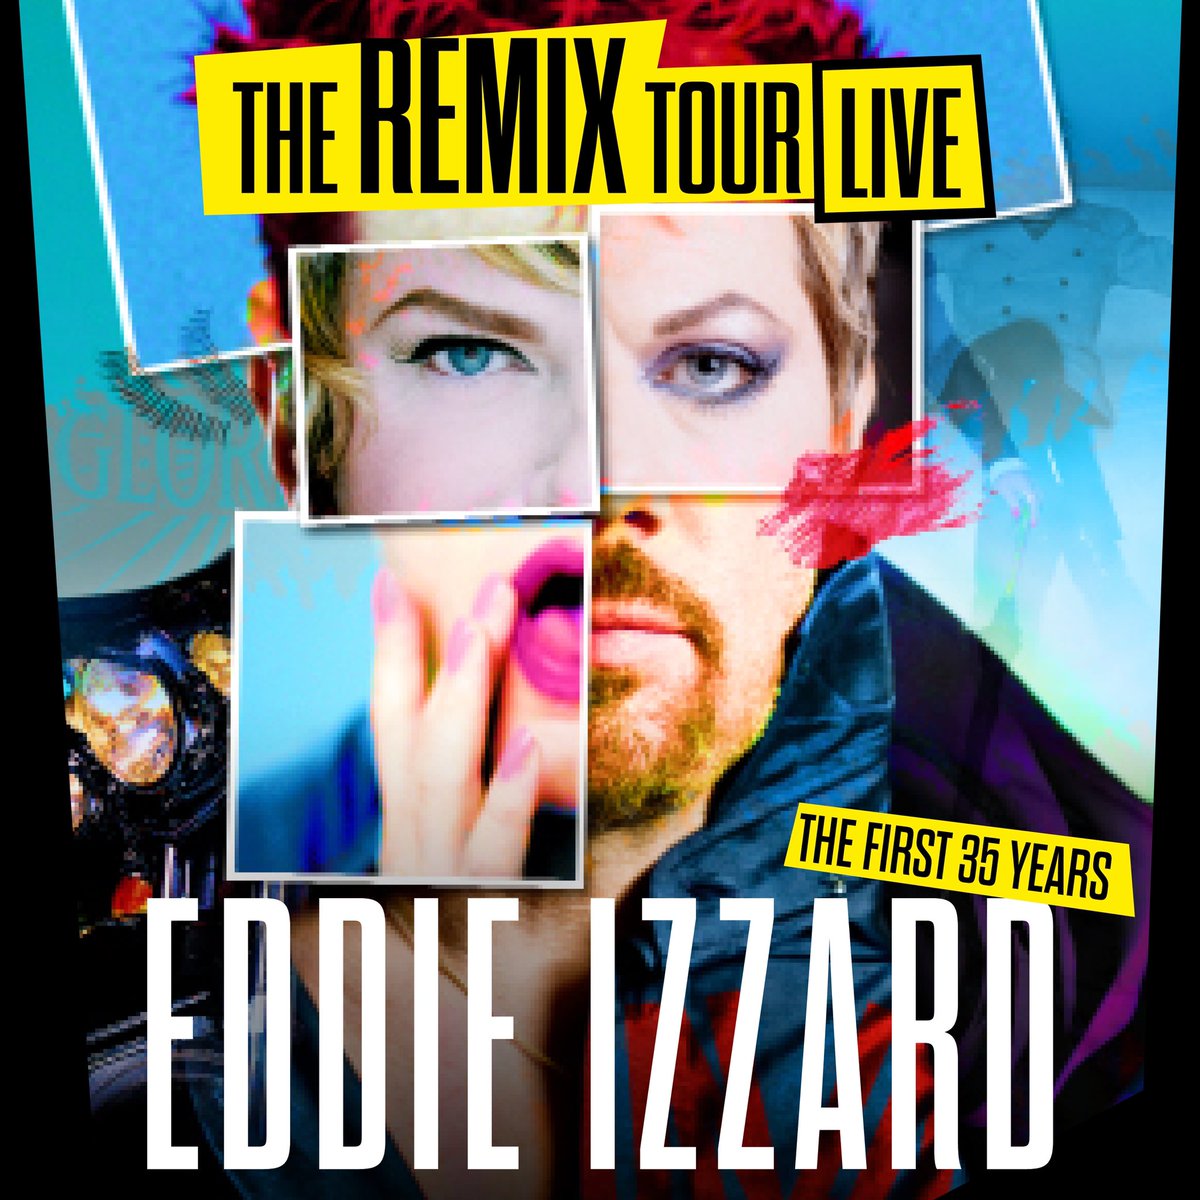 UK! Tickets are available through eddieizzard.com/shows as well as ticketmaster.co.uk . Check both for ticket availability. #eddieizzardremixtour #eddieizzard